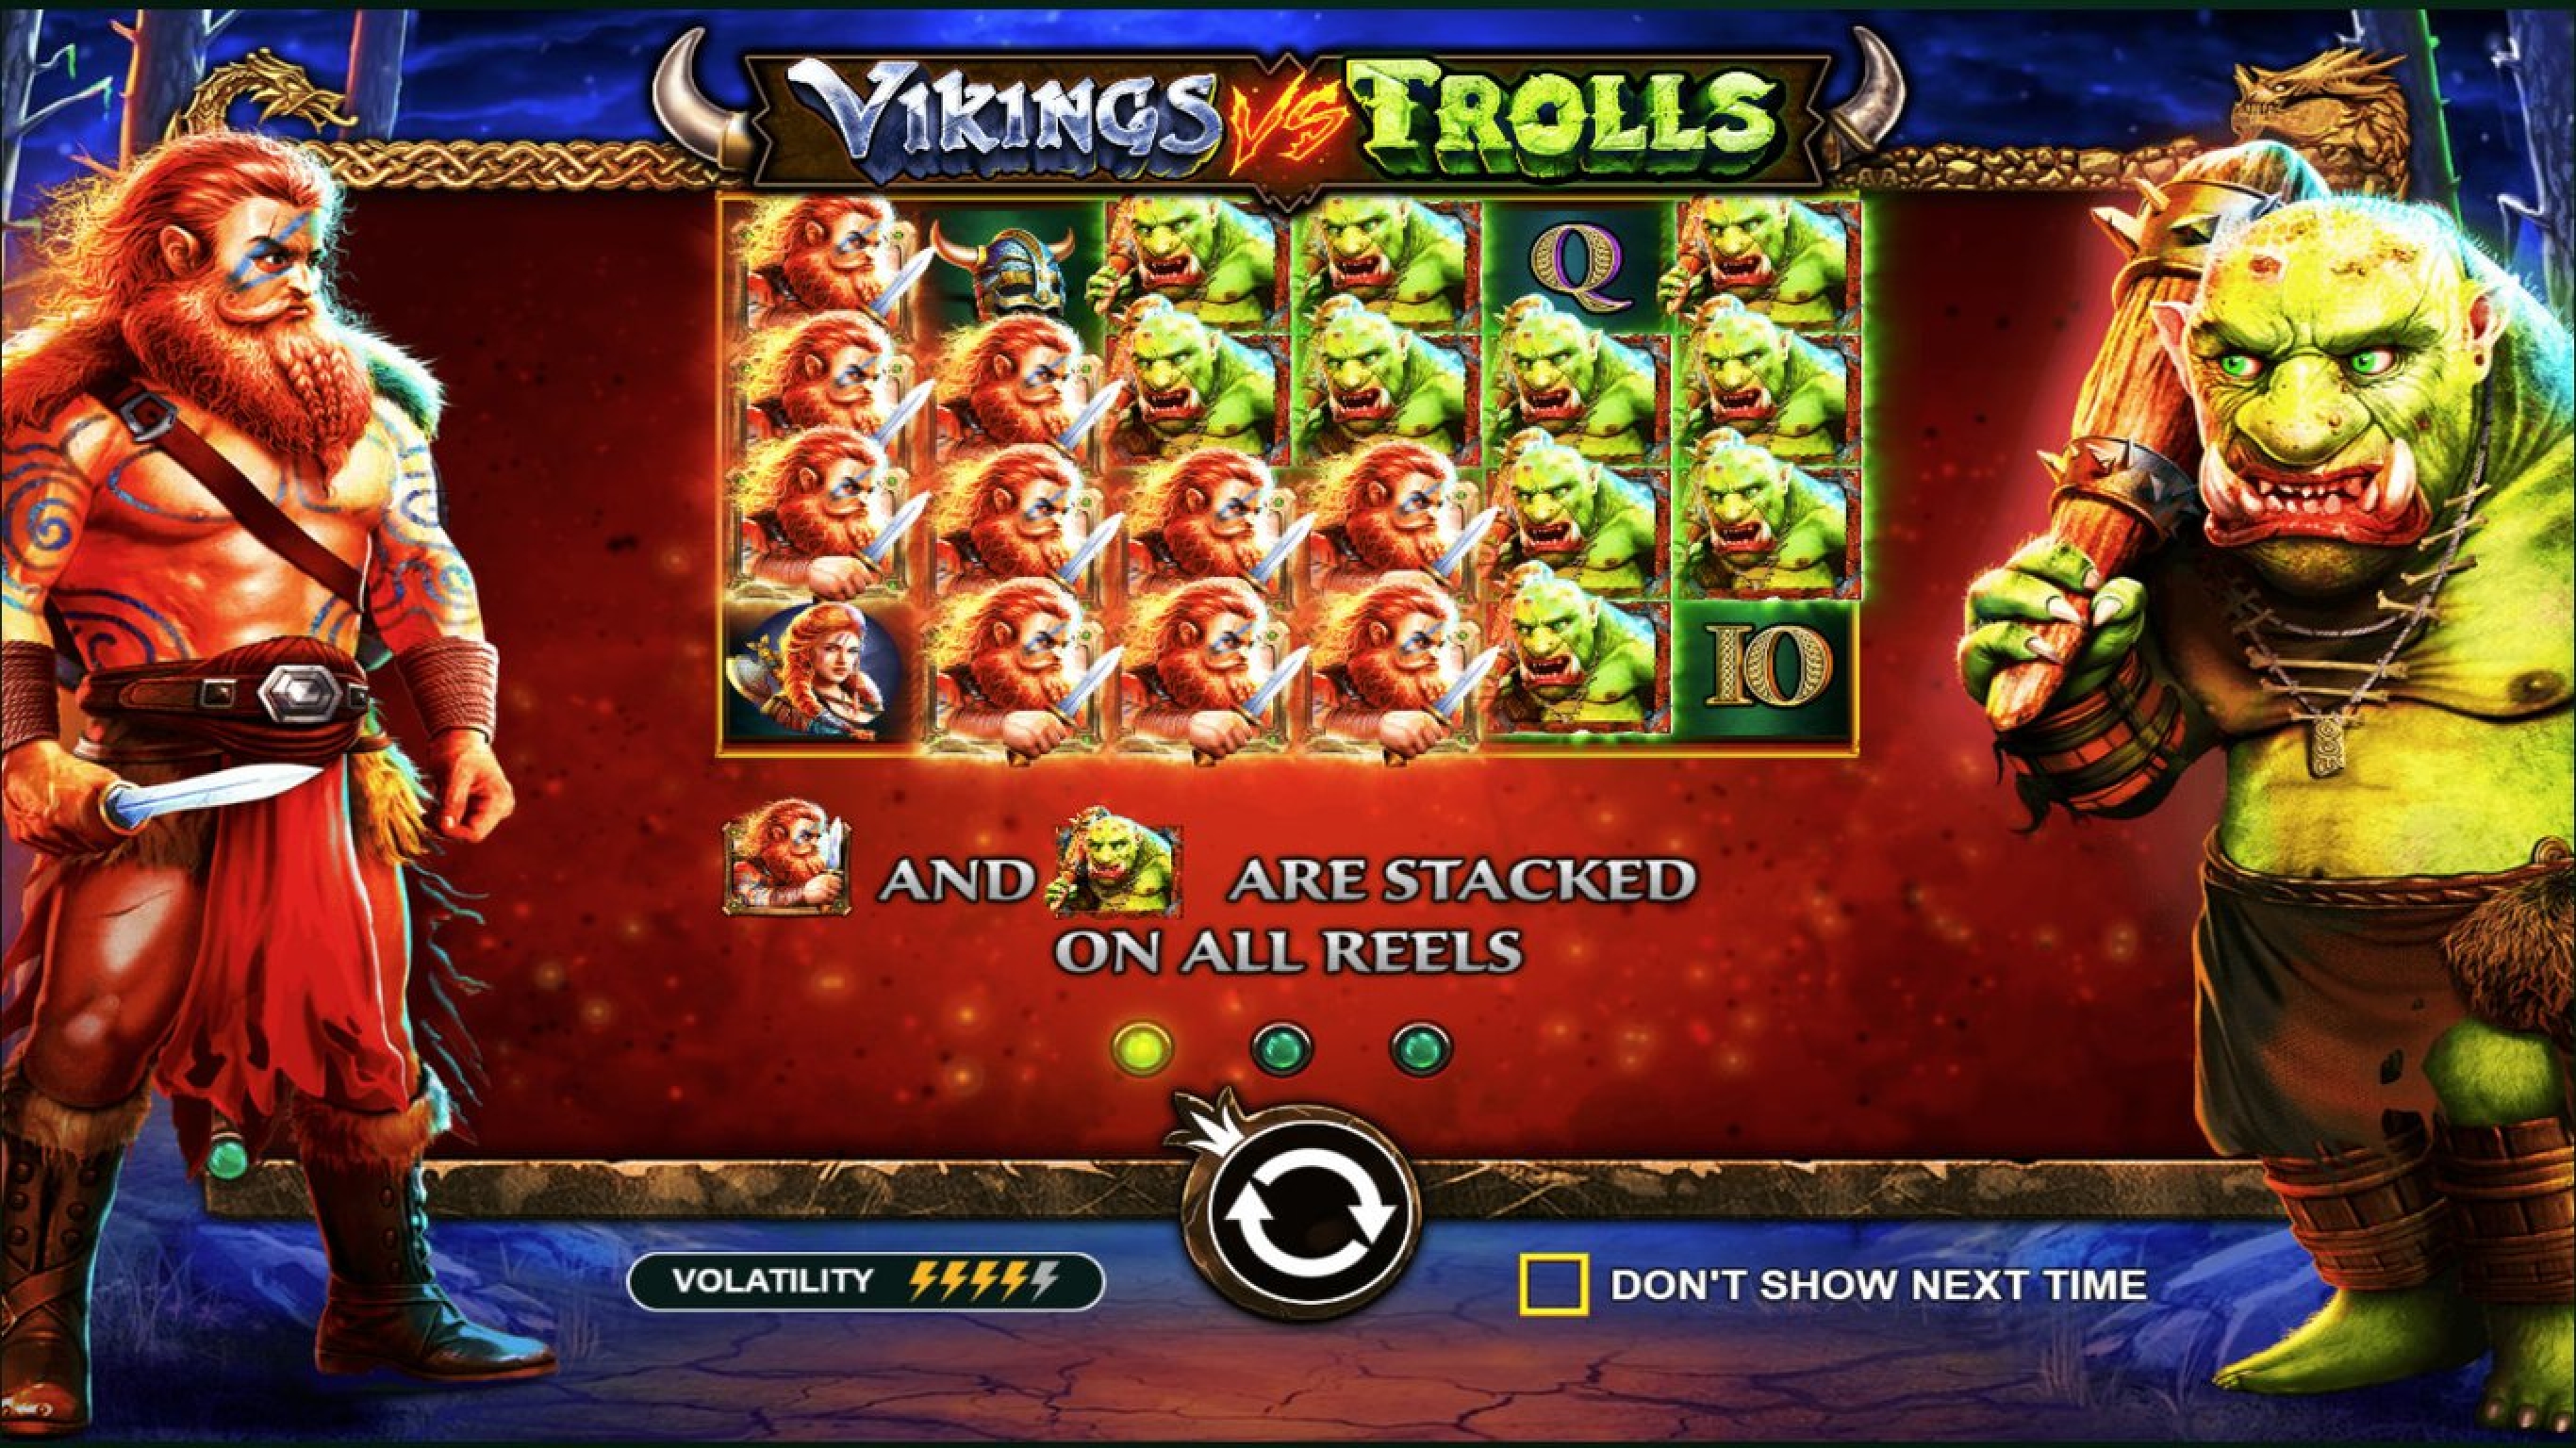 The Vikings vs Trolls Online Slot Demo Game by Pragmatic Play